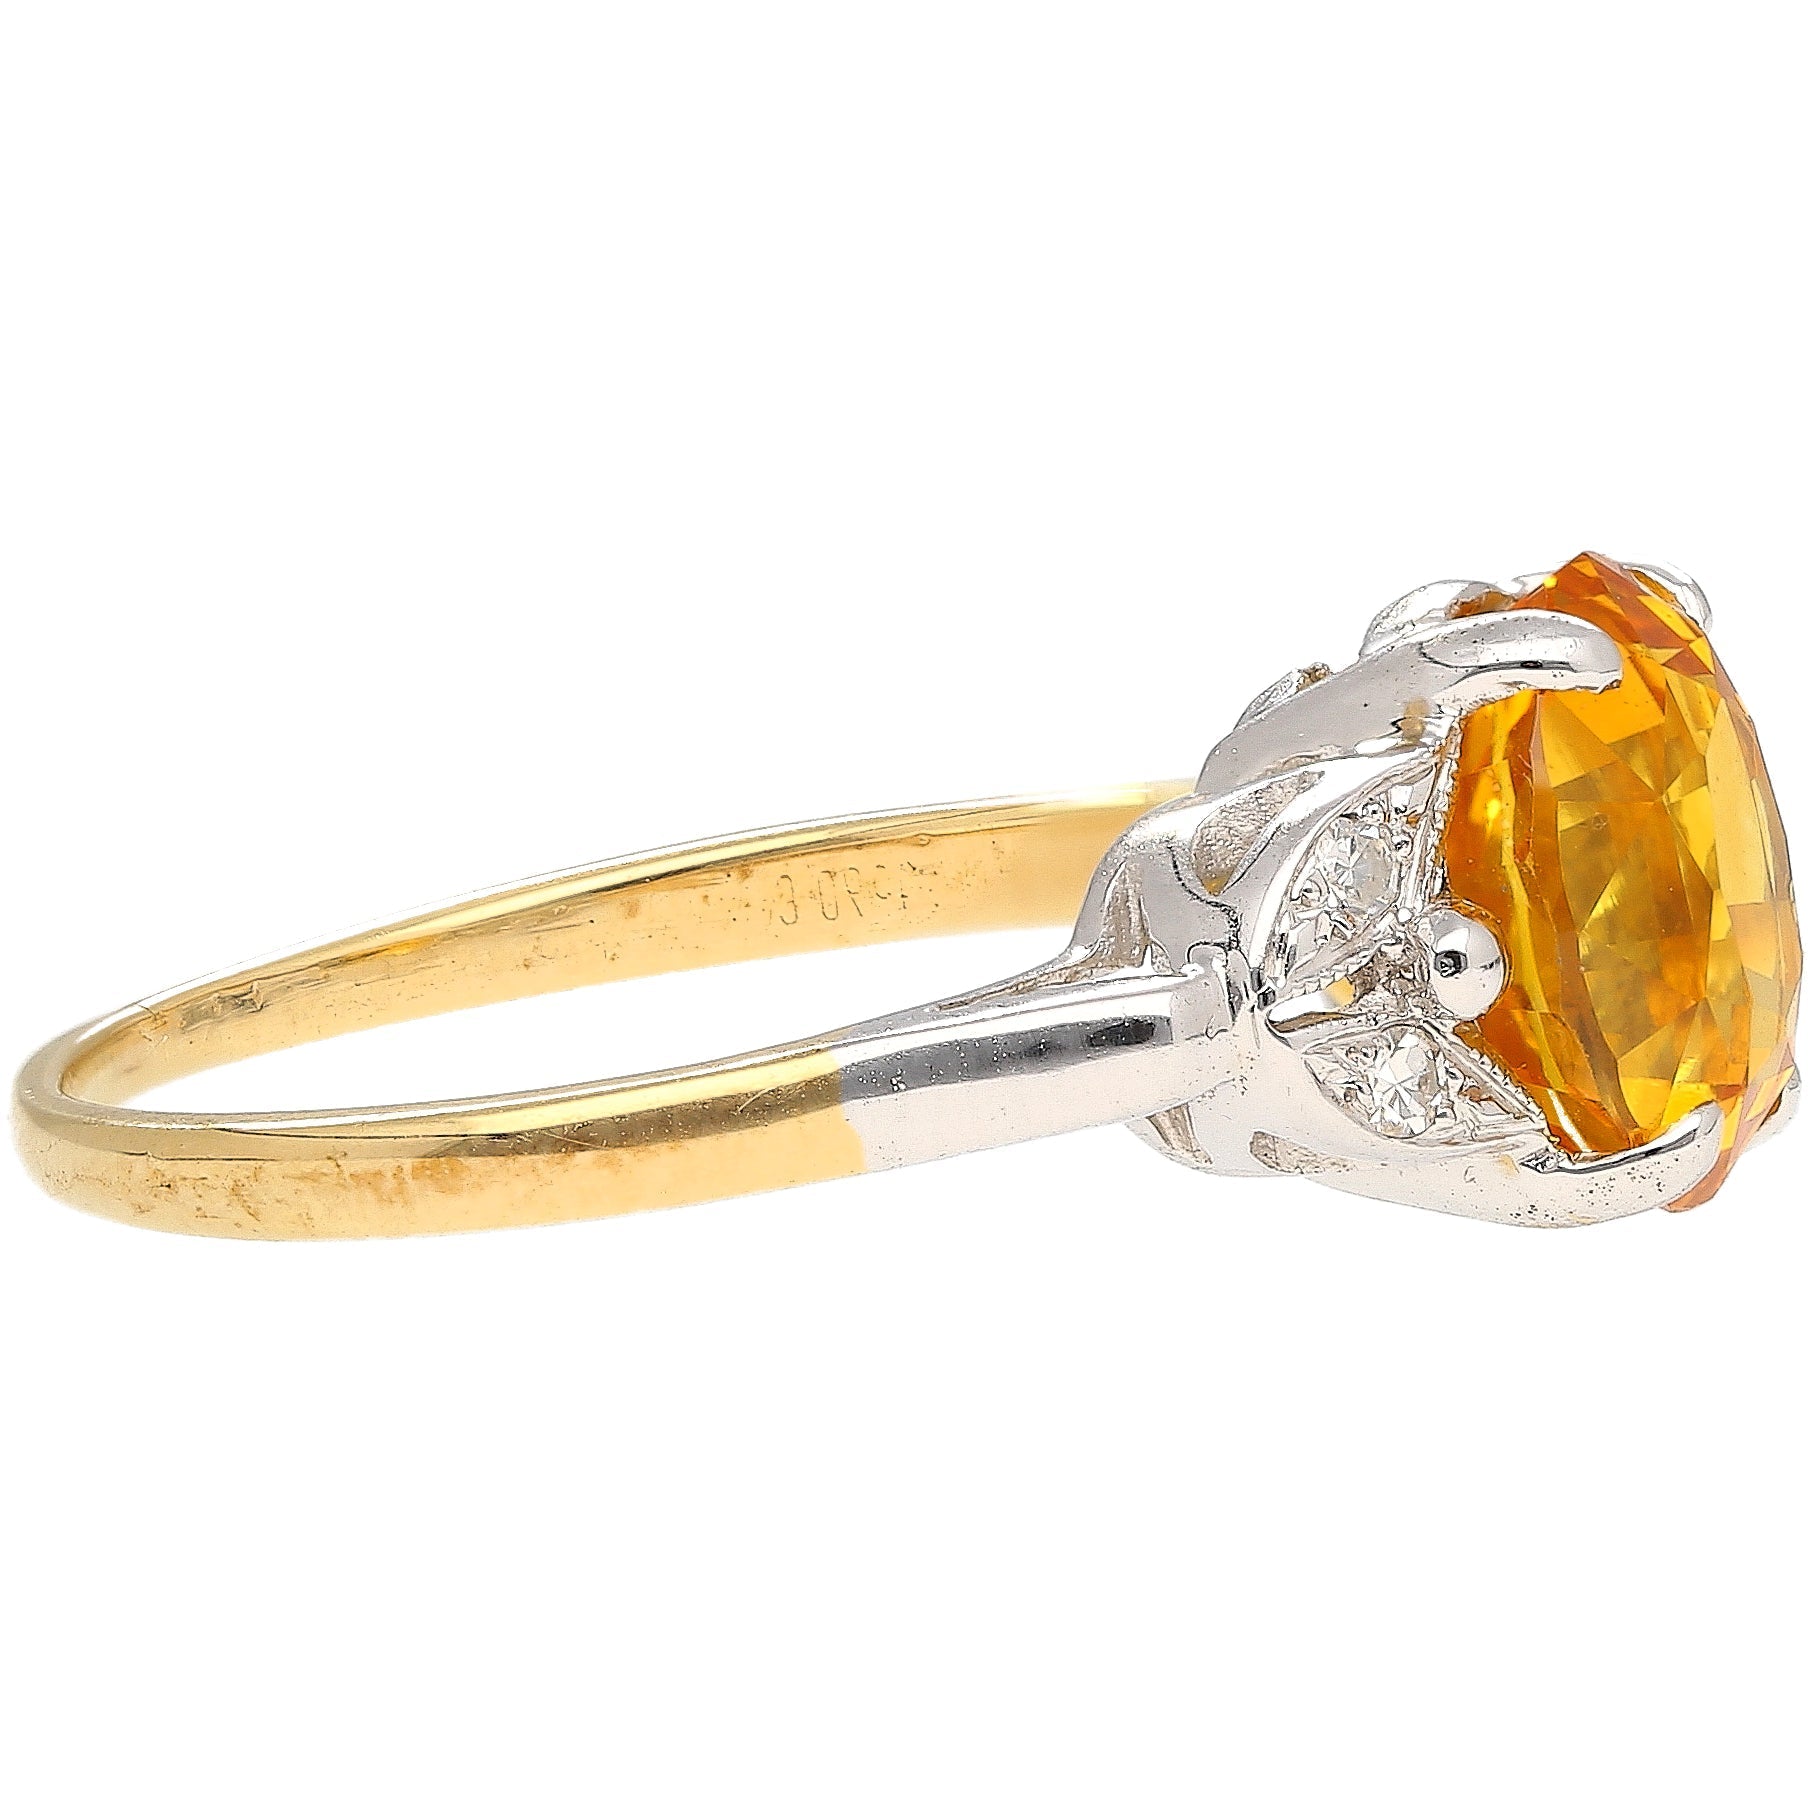 3.06 Carat Oval Cut Yellow Sapphire & Diamonds Ring in Platinum & 14K Gold Setting